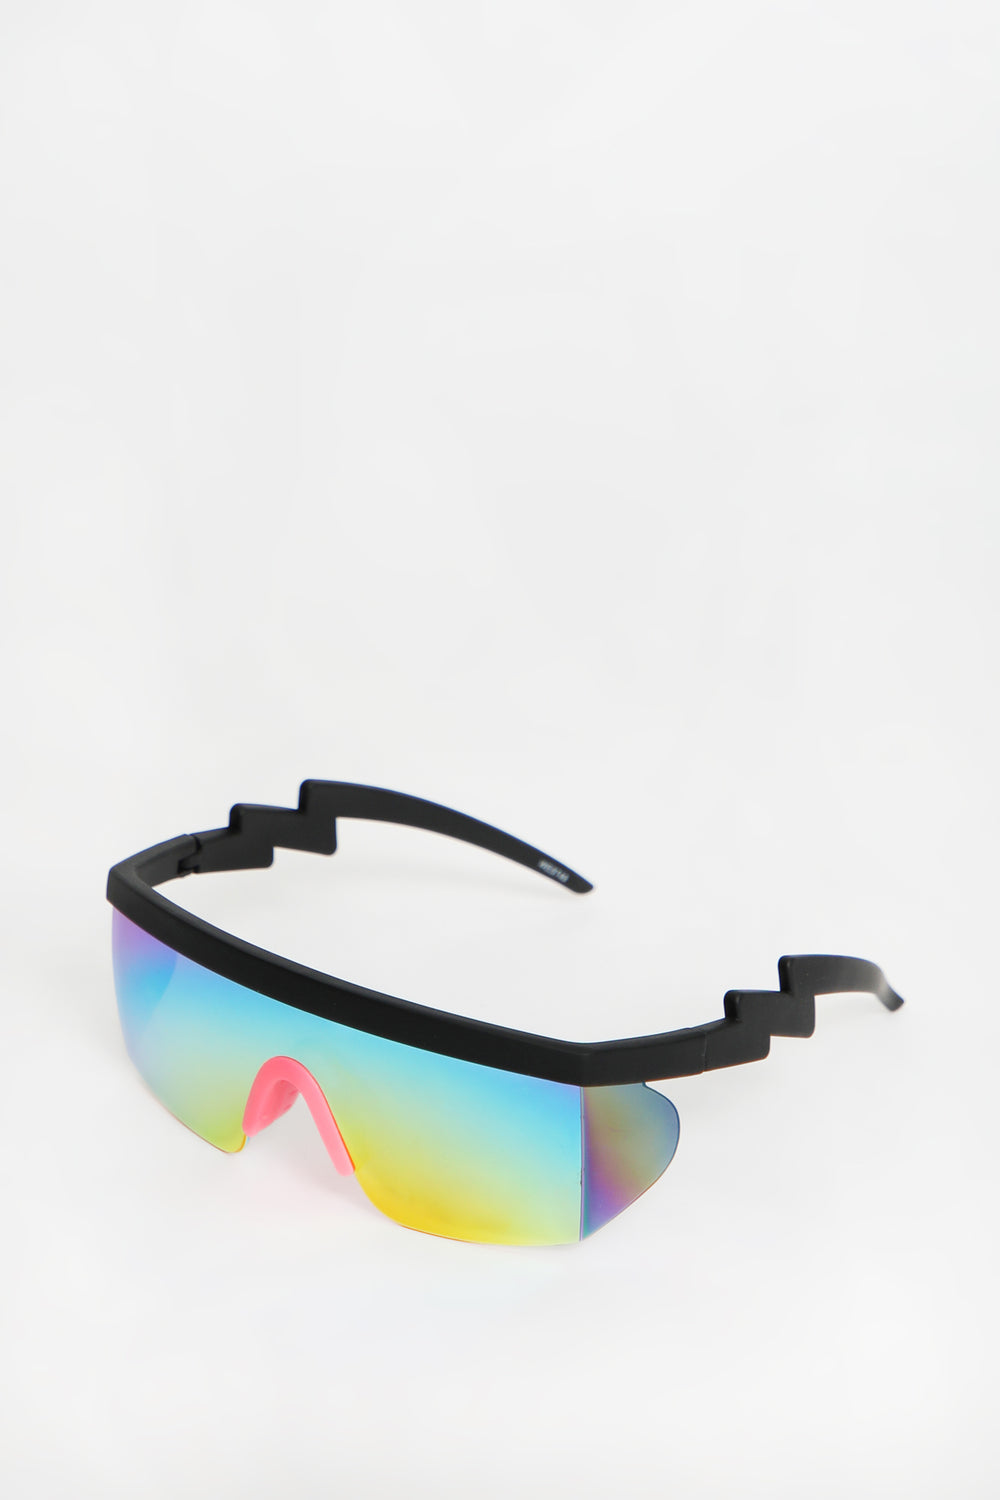 West49 Mirror Shield Sunglasses West49 Mirror Shield Sunglasses